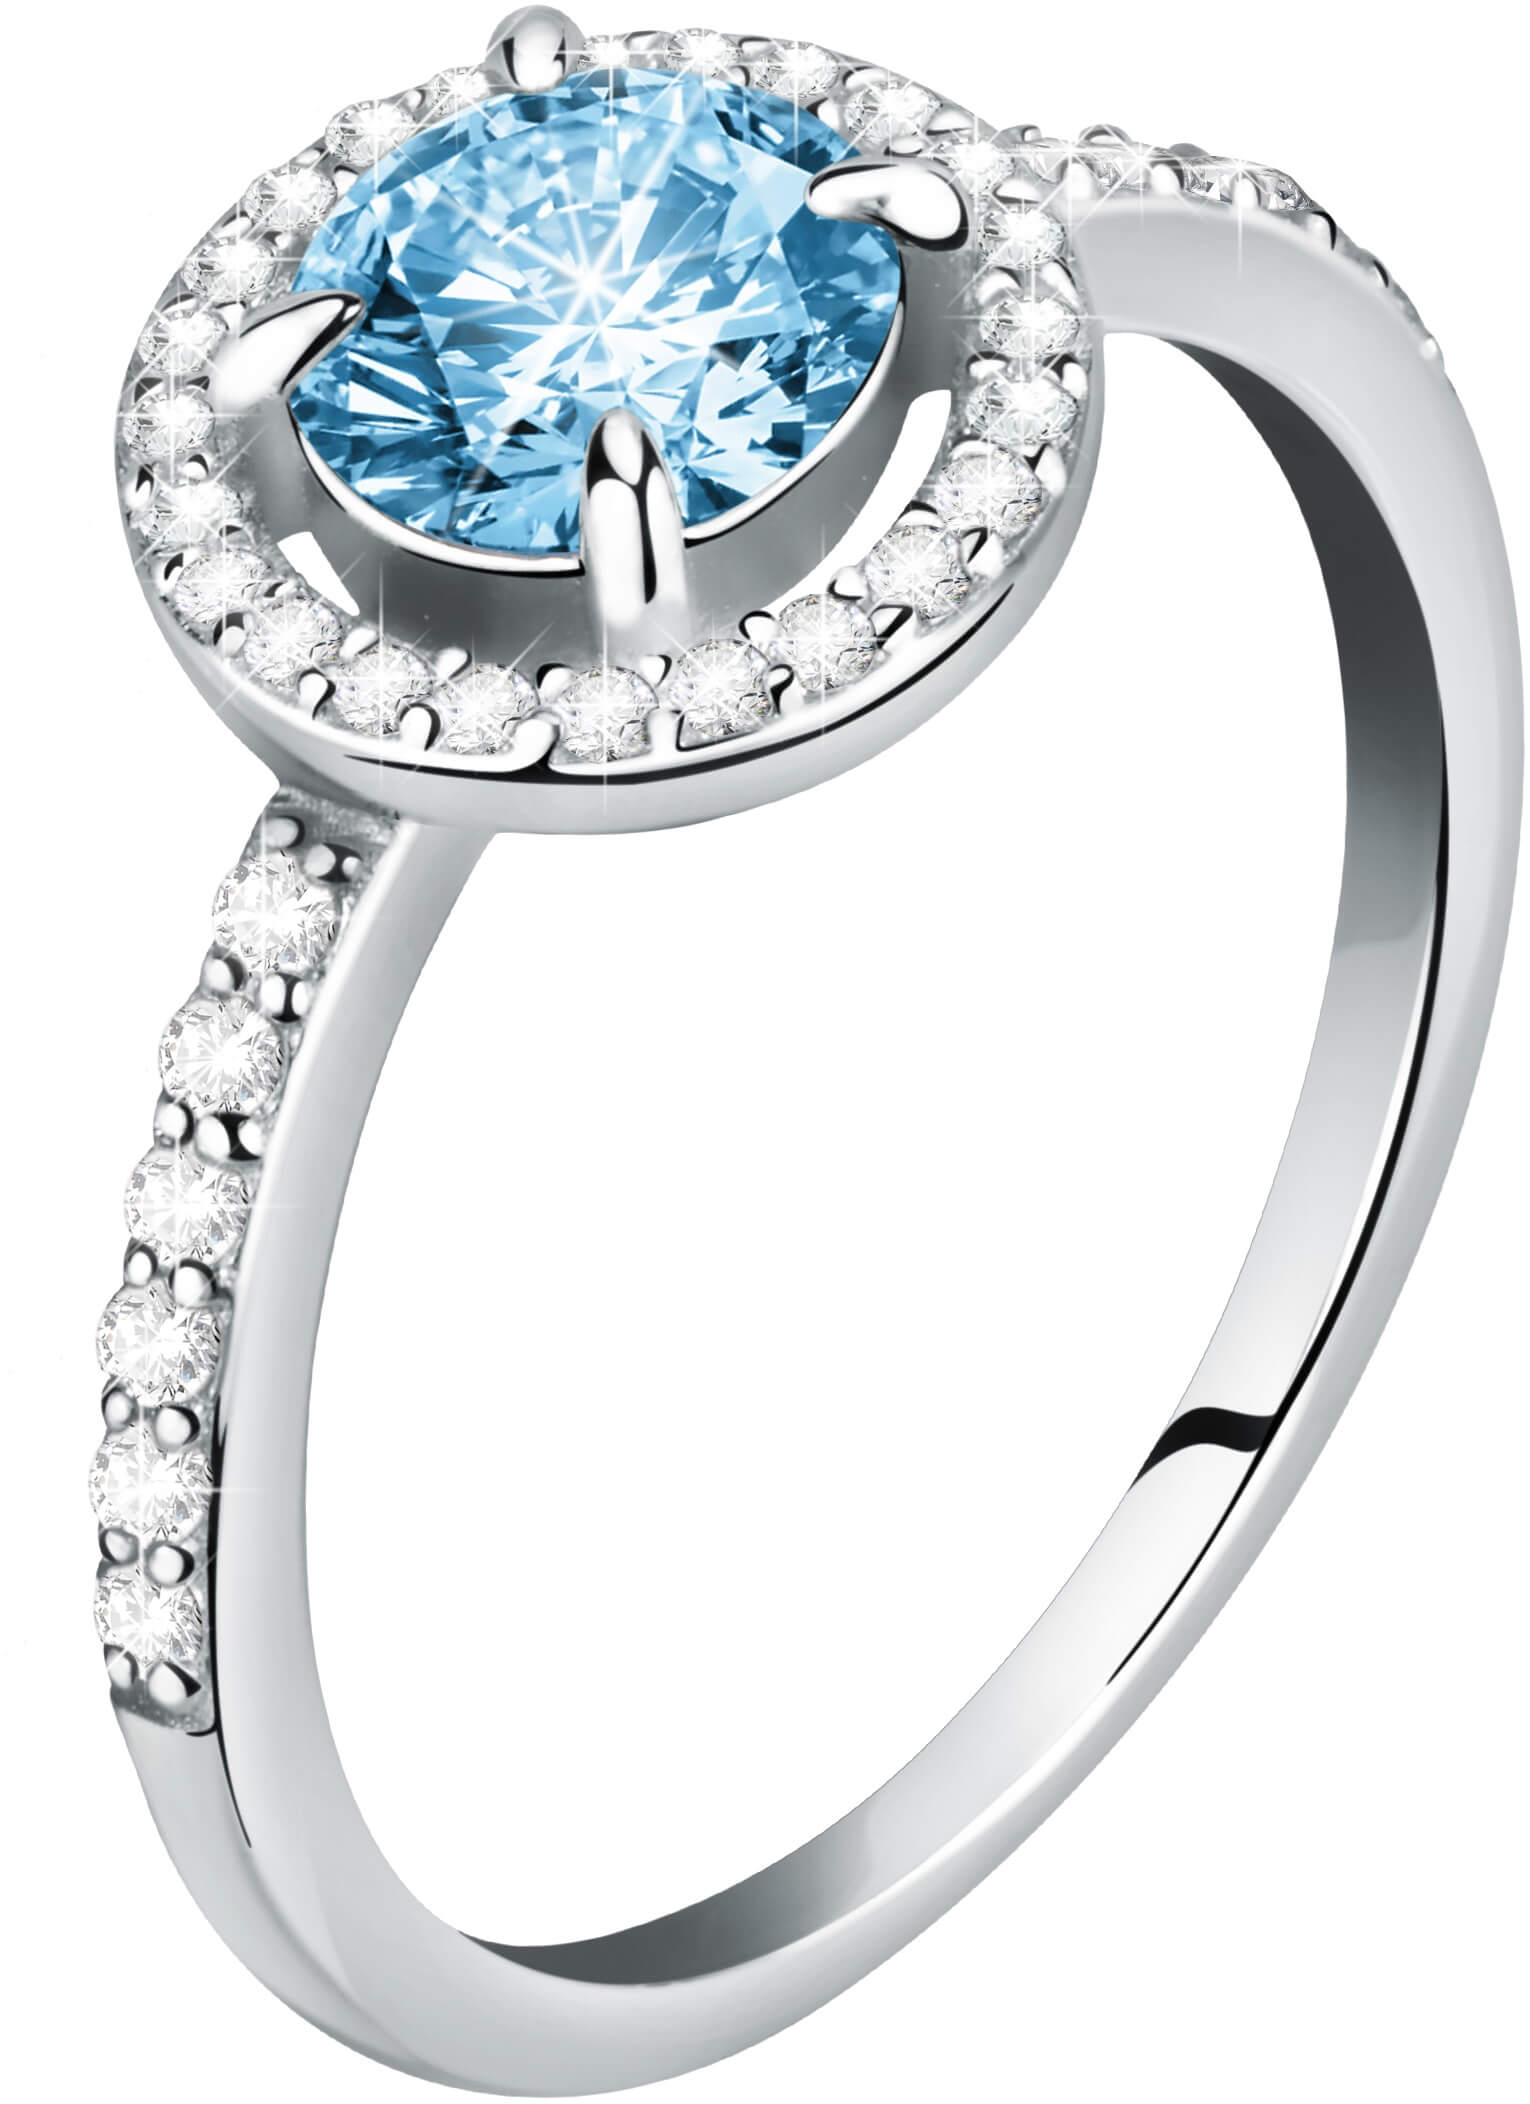 Morellato Něžný stříbrný prsten s akvamarínem a krystaly Tesori SAIW9701 56 mm